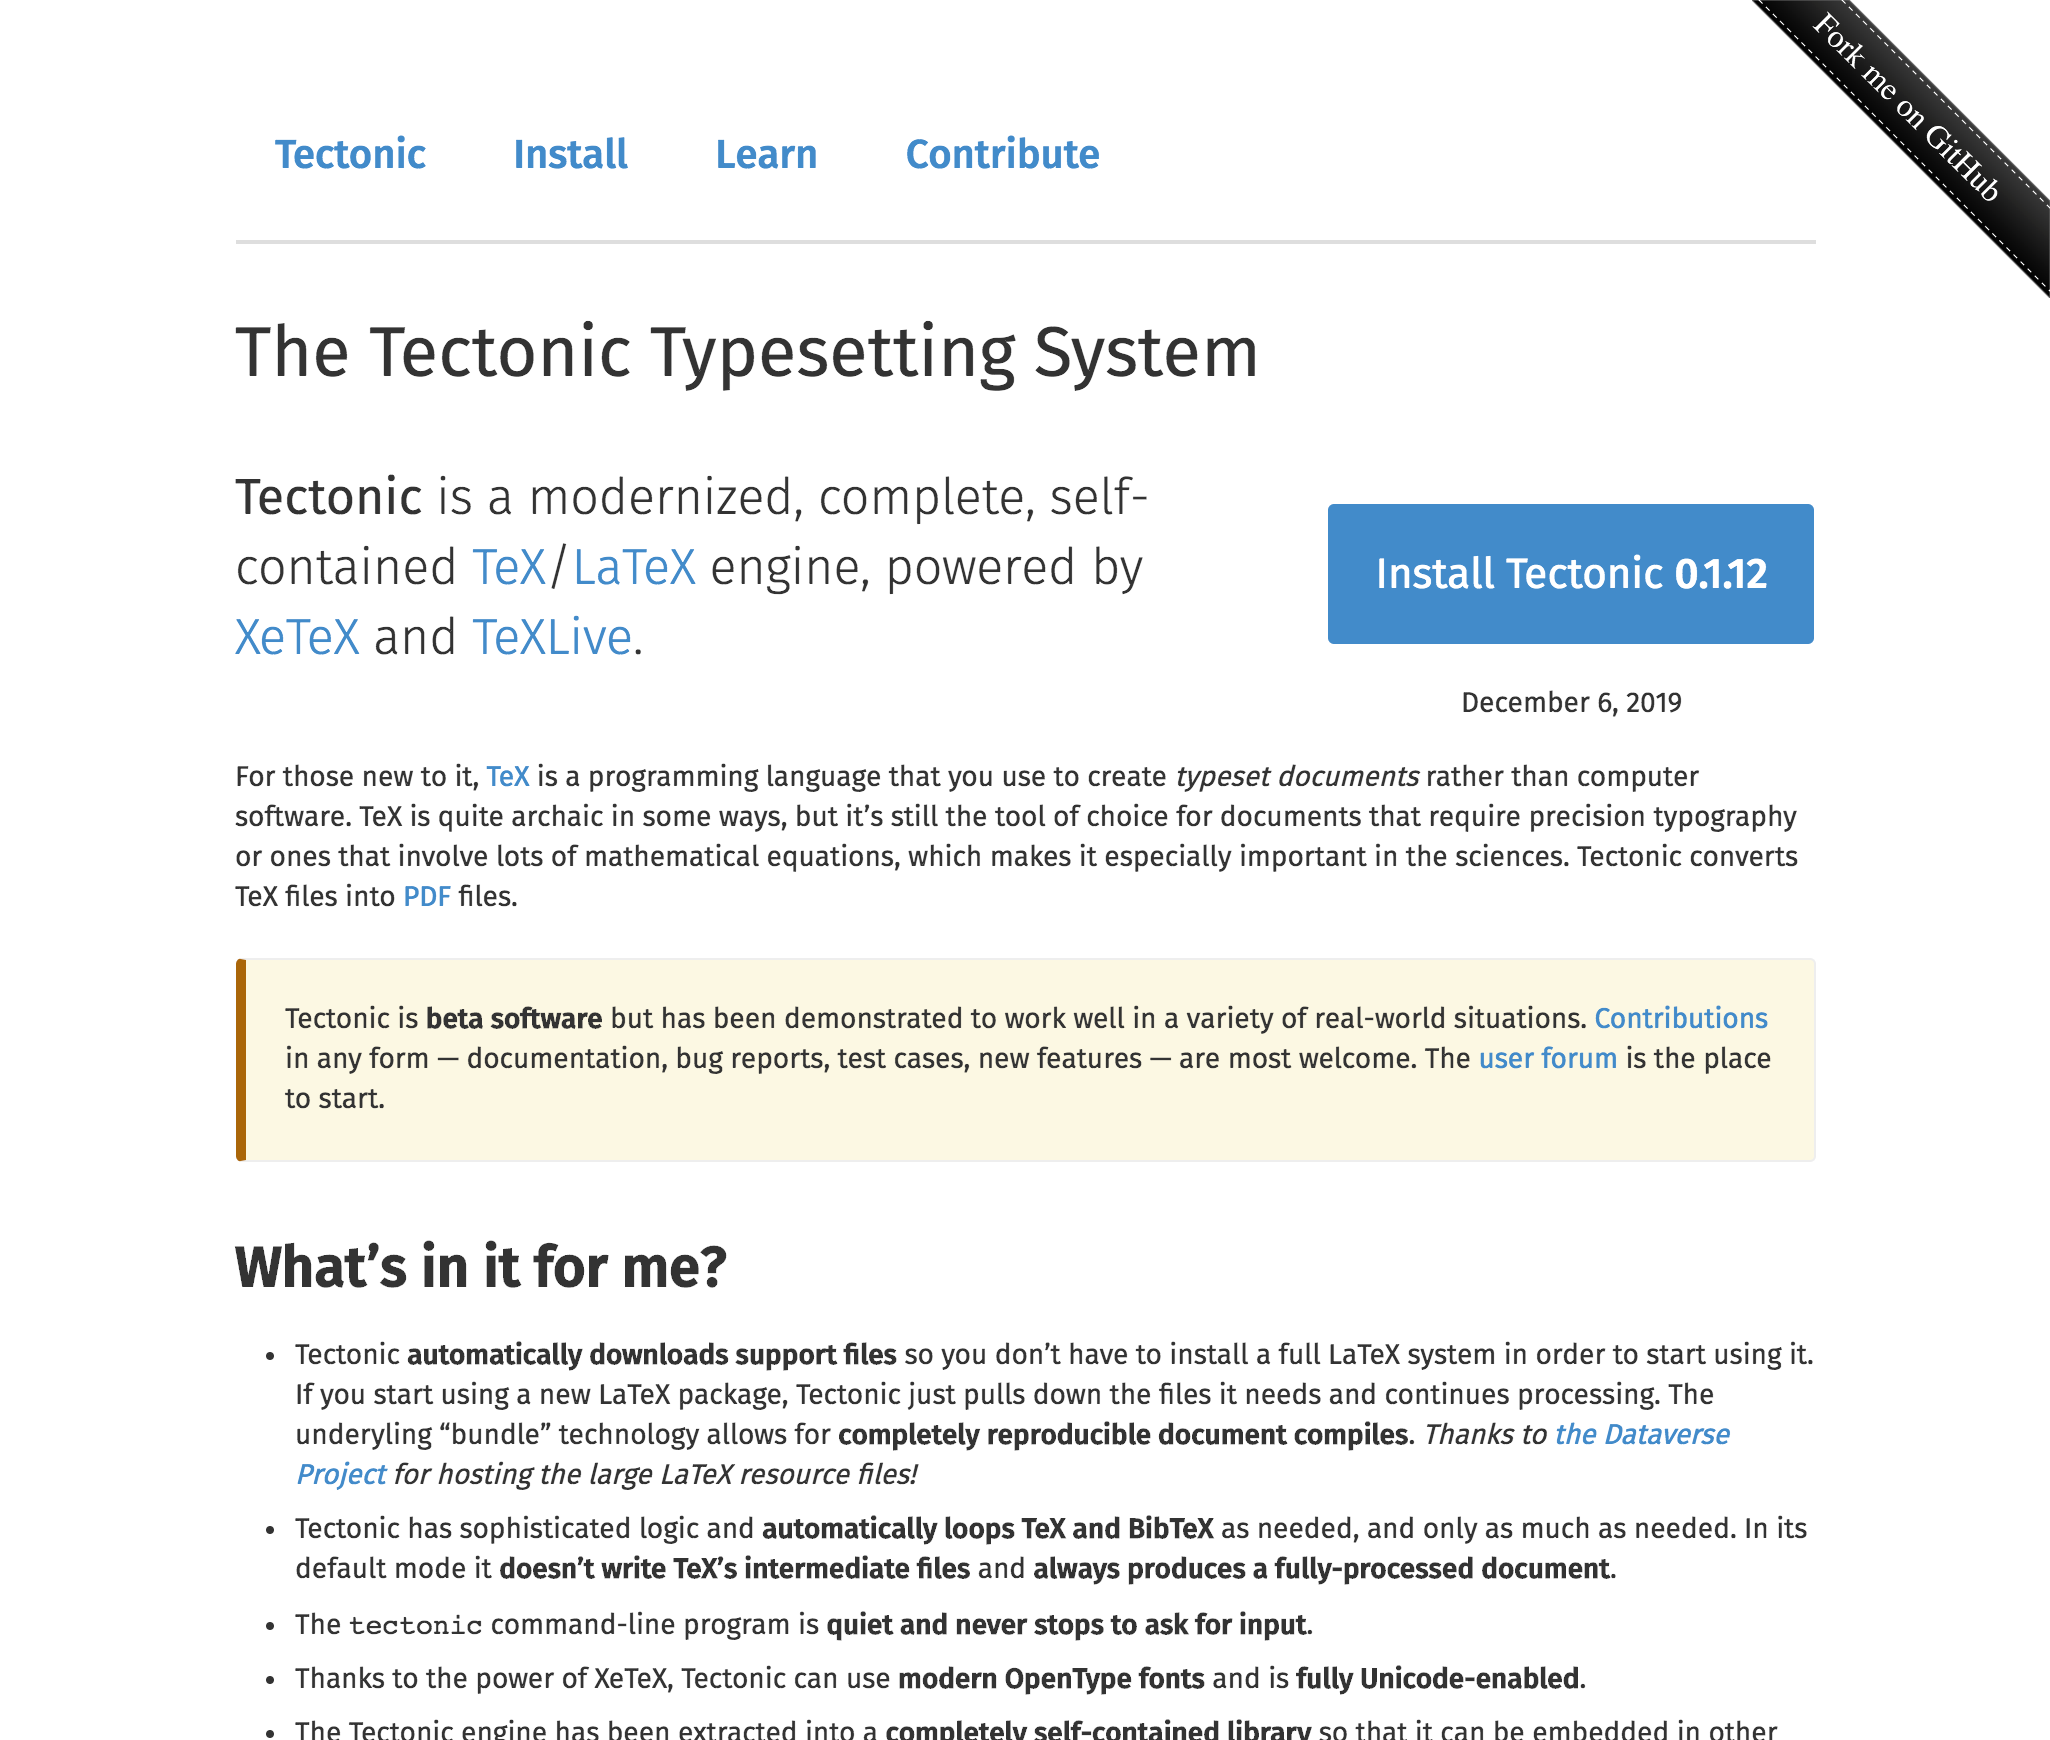 Tectonic Typesetting System